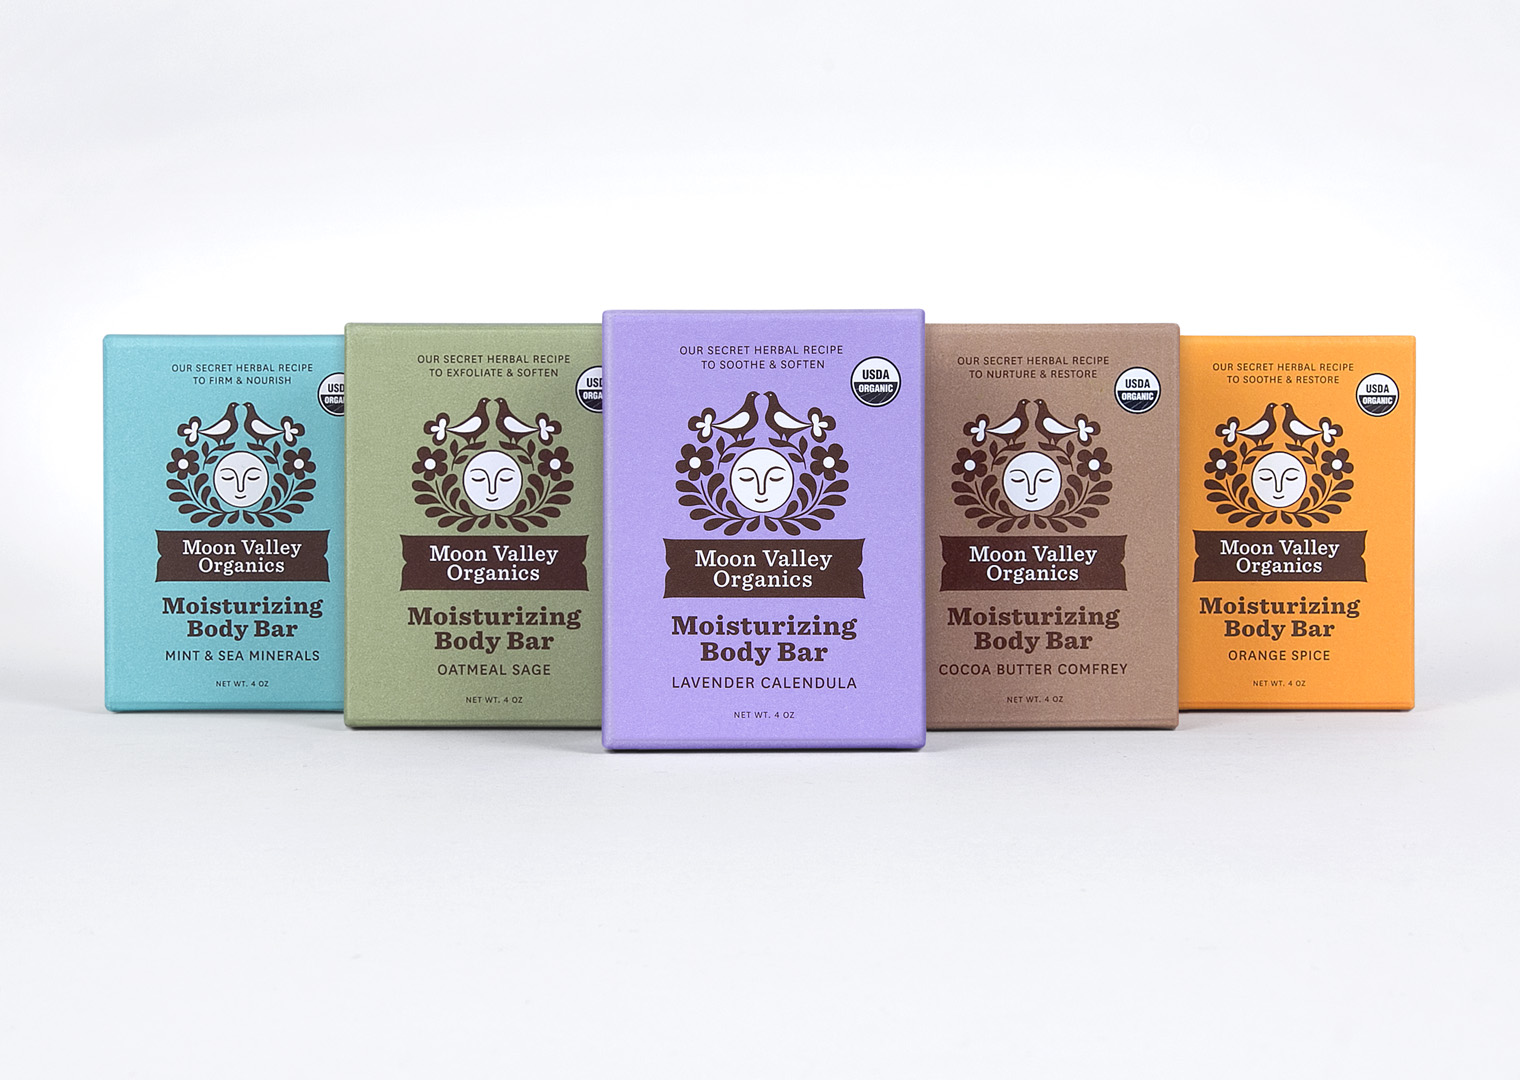 Moon Valley Organics soap packaging